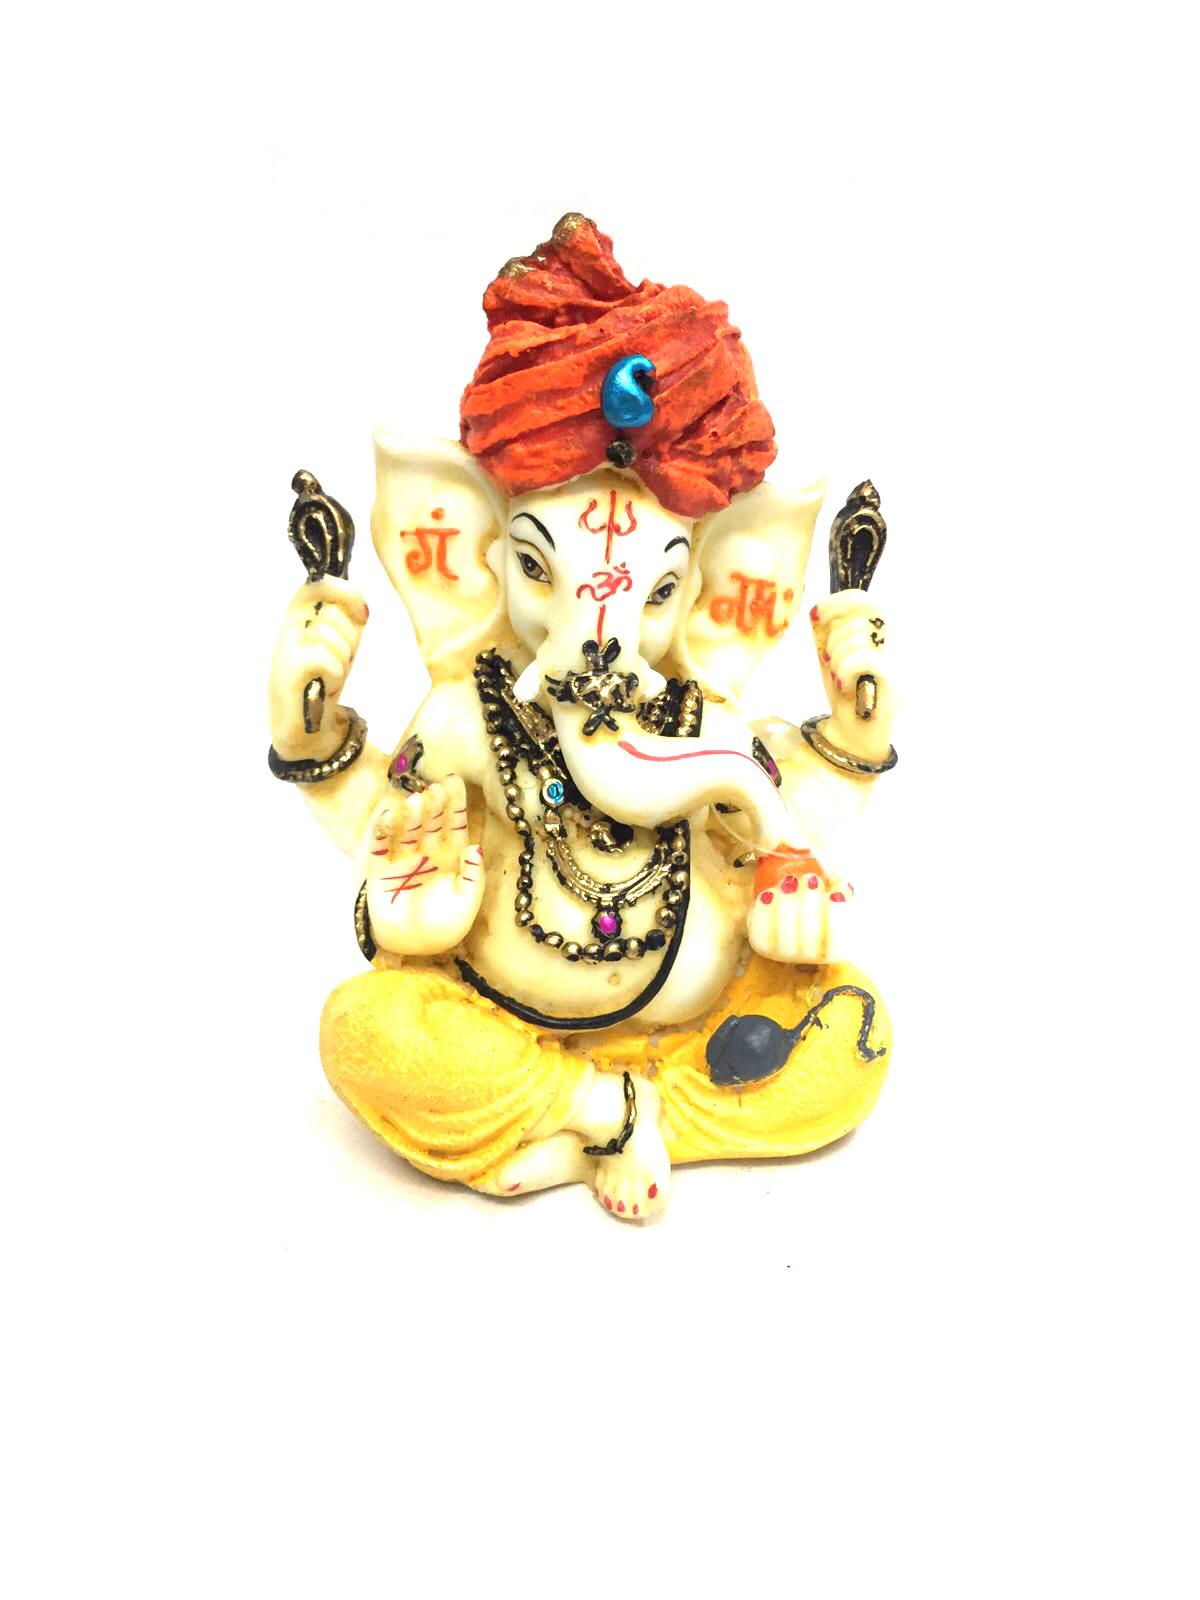 Matte Finish Ivory Sitting Ganesha Idol Wearing Turban Collectible Tamrapatra